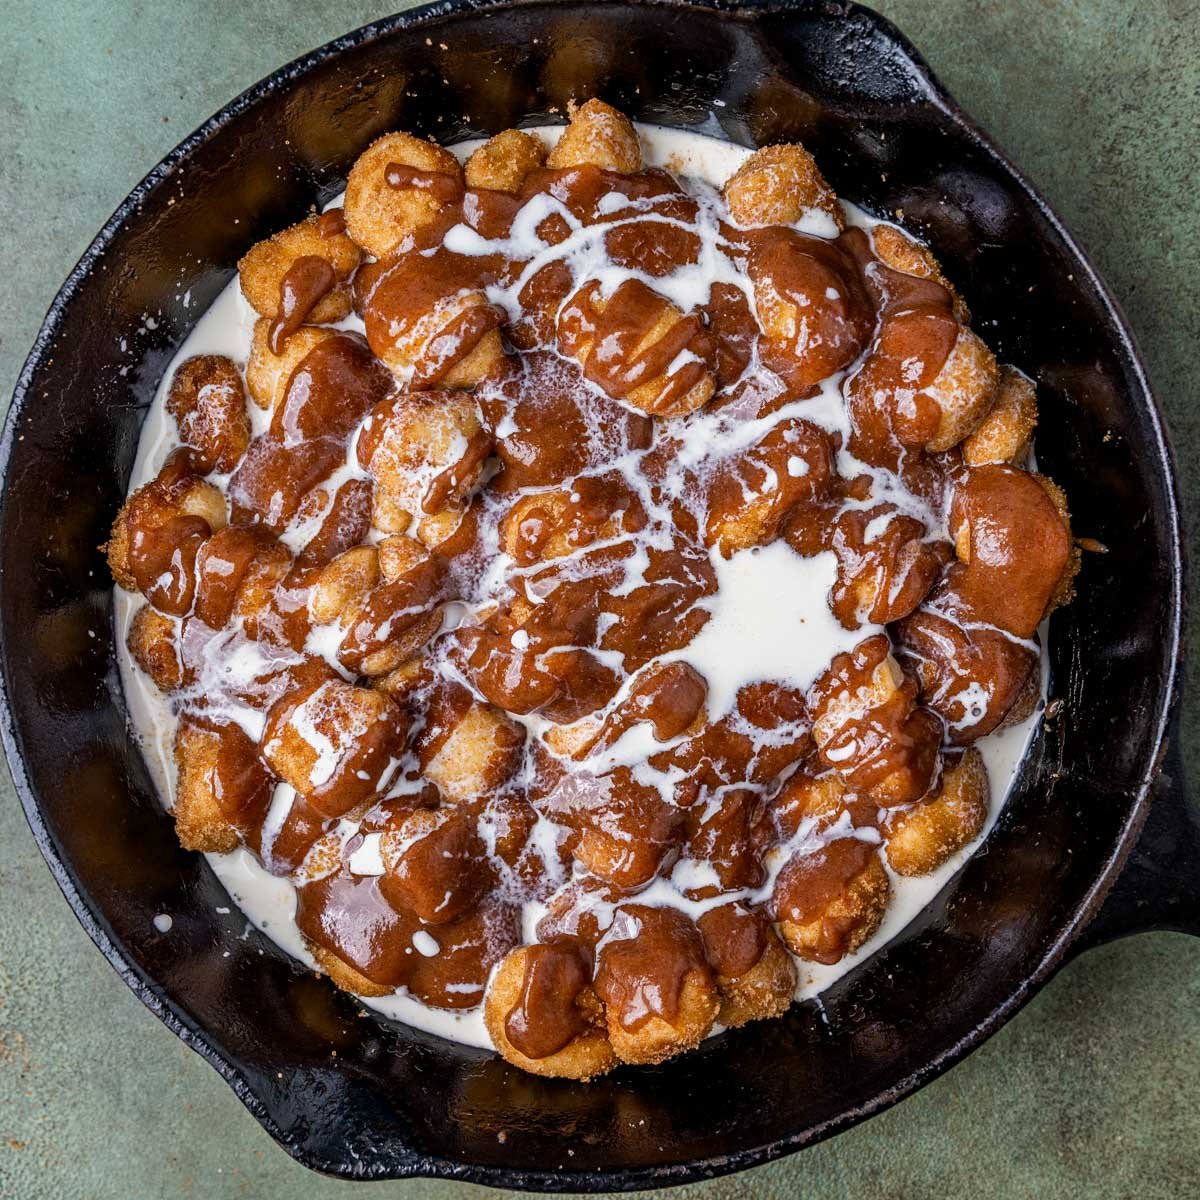 dough balls with cinnamon glaze and heavy cream overtop